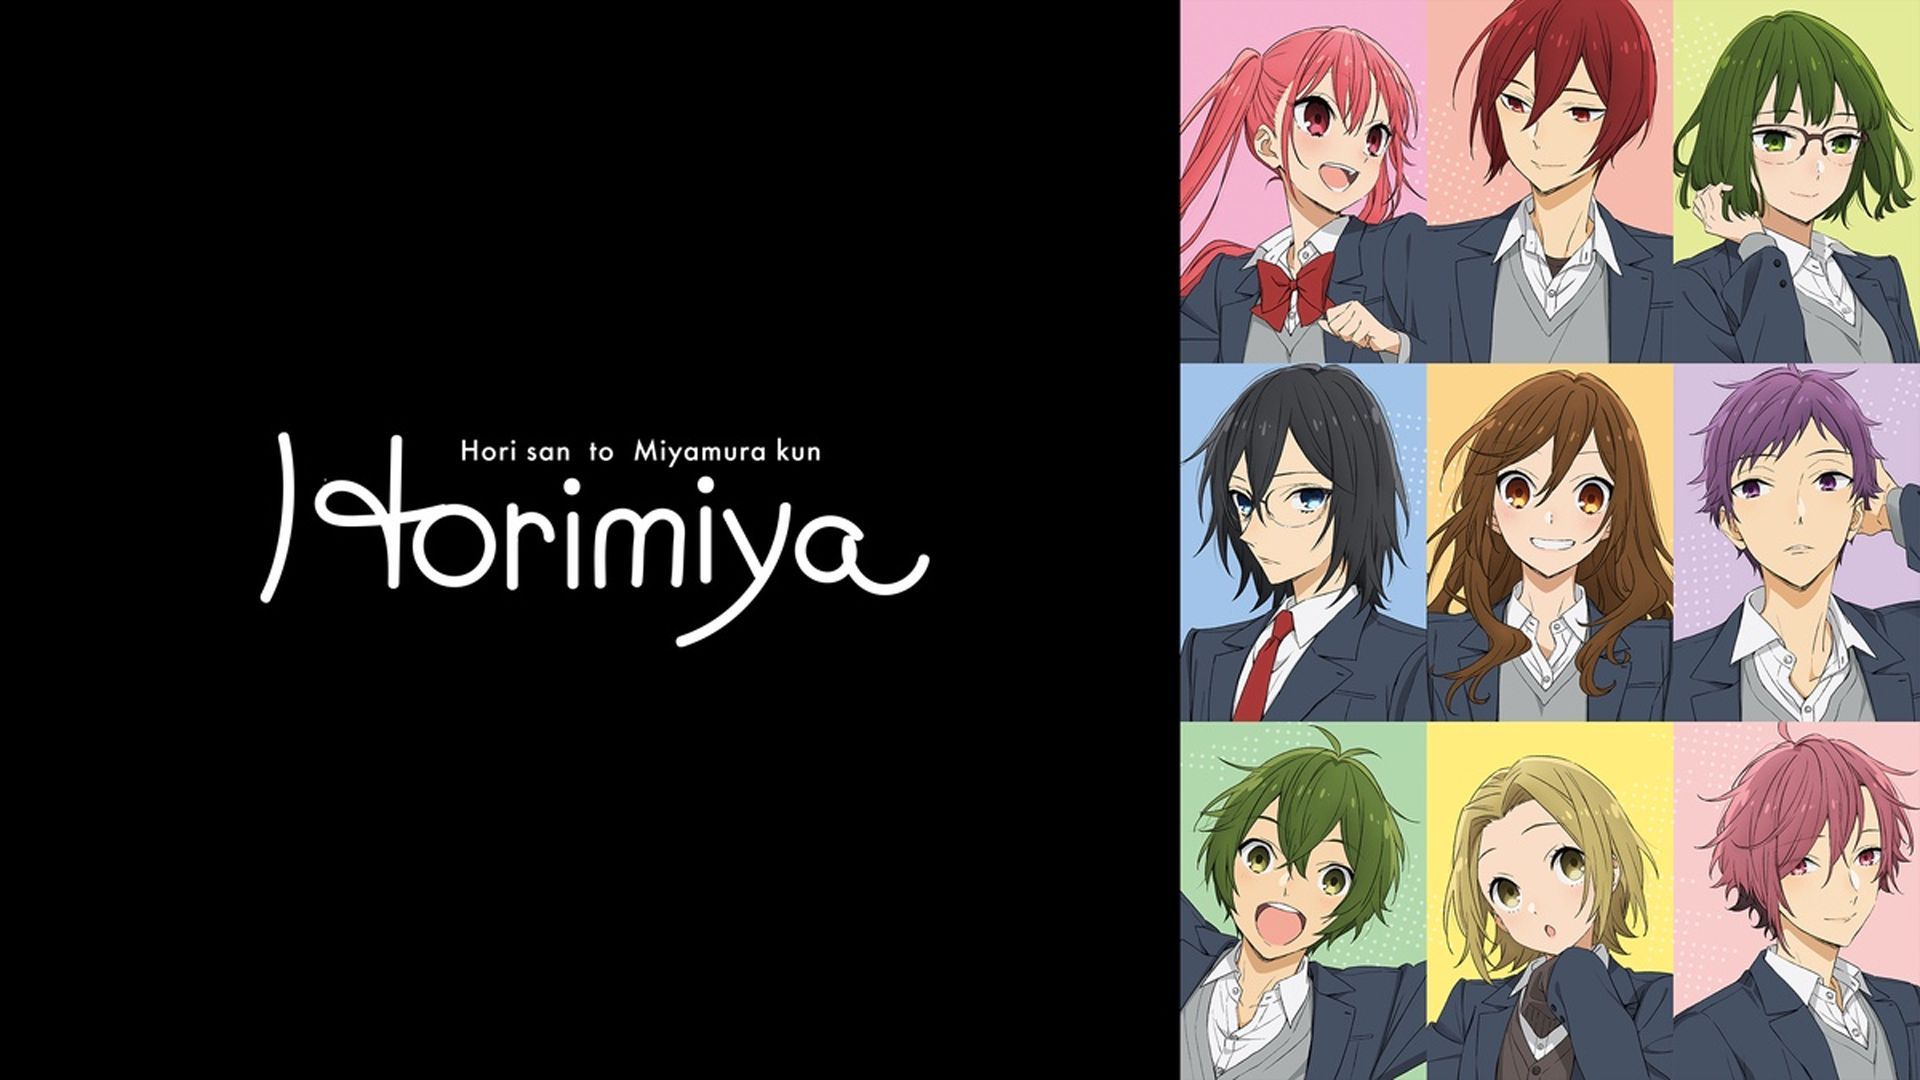 miyamura turn in hori mode horimiya piece ep 10 #anime #horimiya